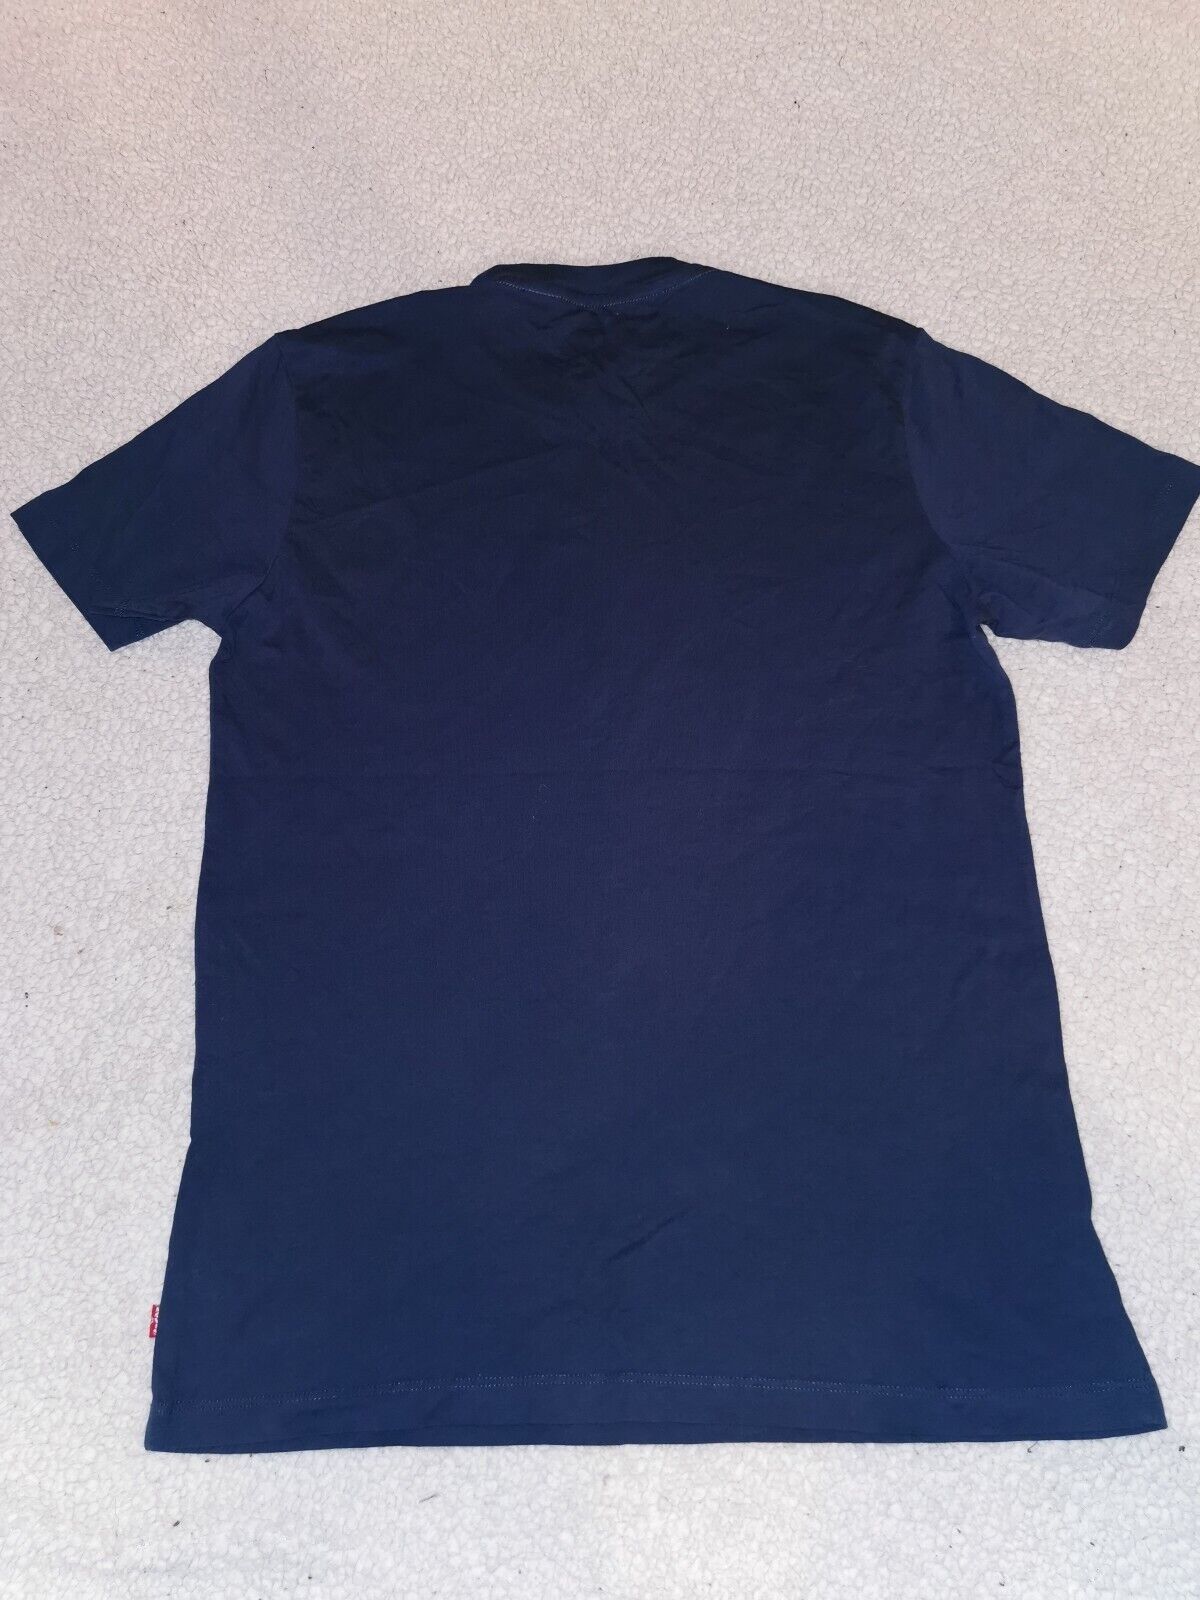 Men's Size S Levi Strauss & Co San Francisco Blue Tshirt | eBay